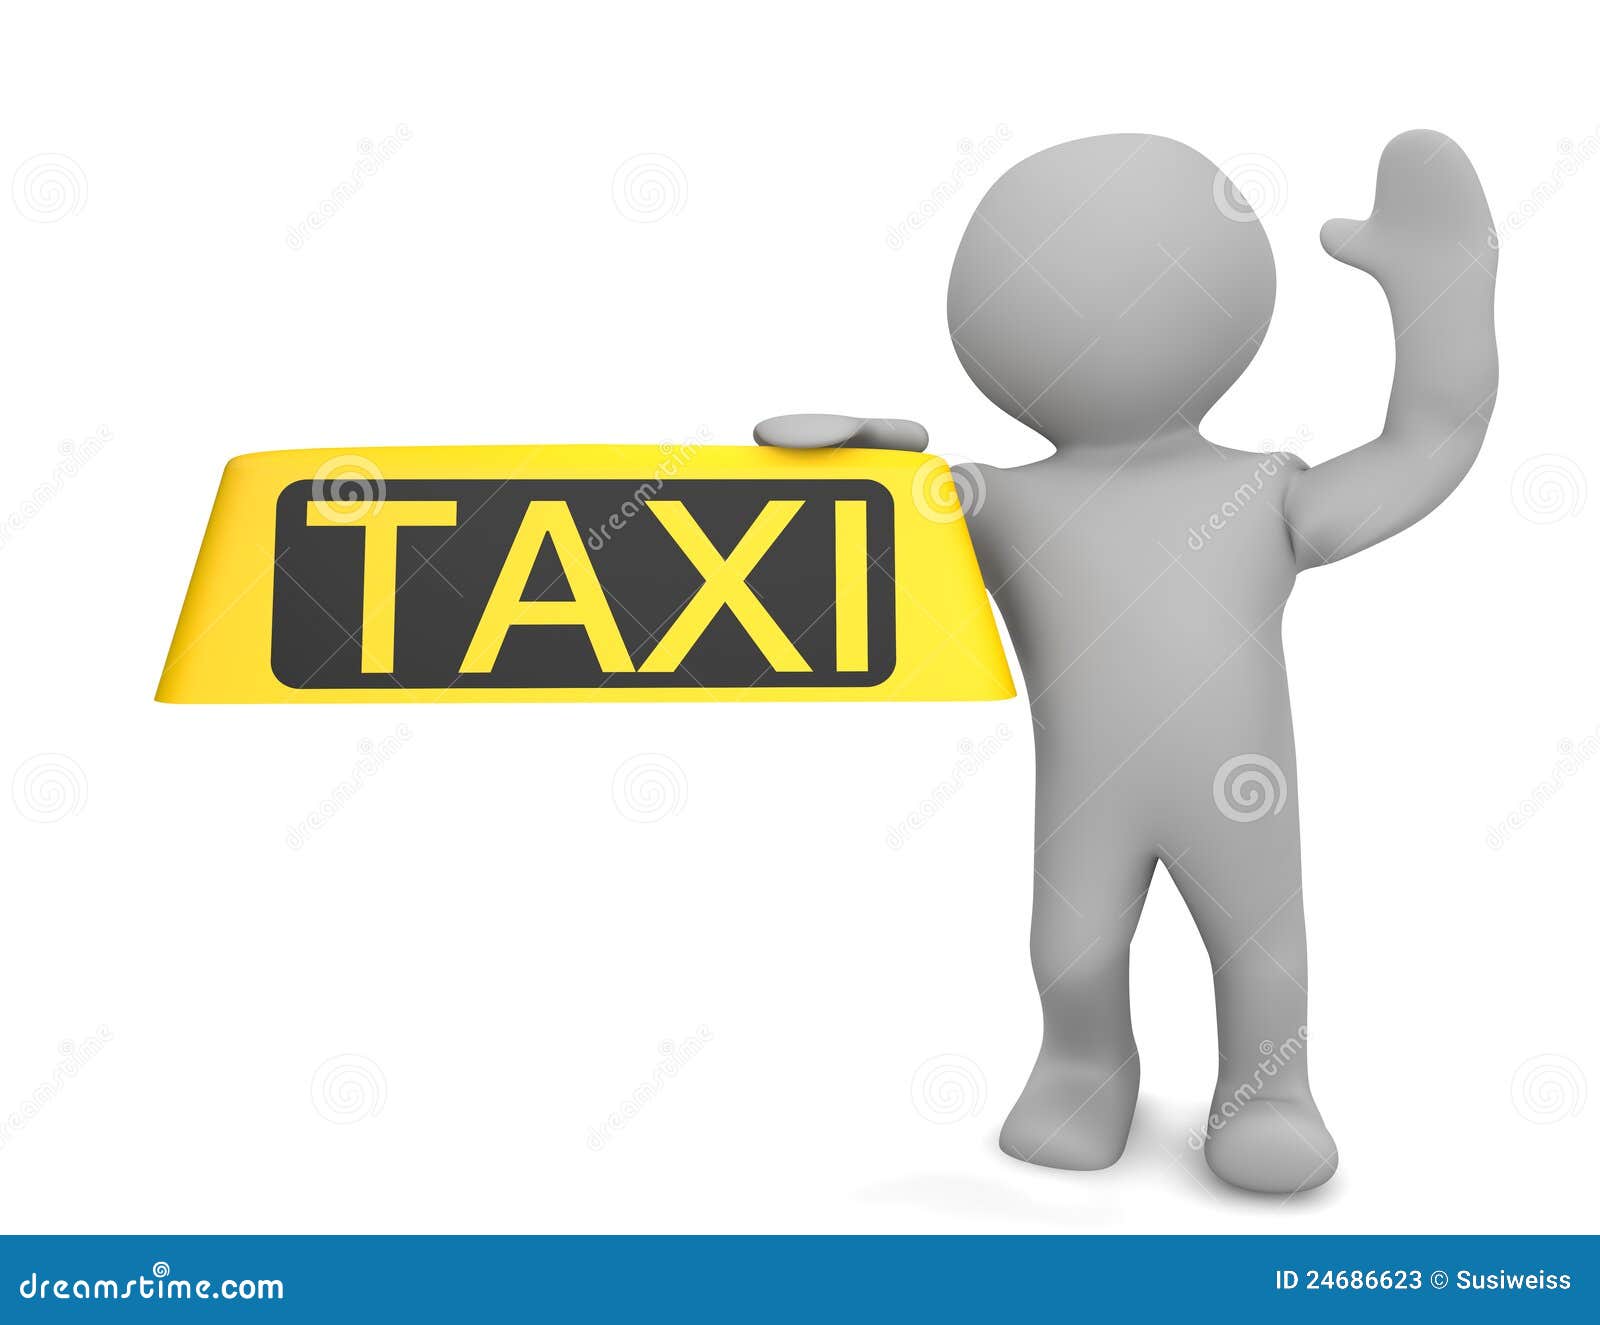 Fast public. Белые человечки такси. Картинки для презентации человечки такси. Такси человек поднимает руку на логотипе. Human for Taxi.